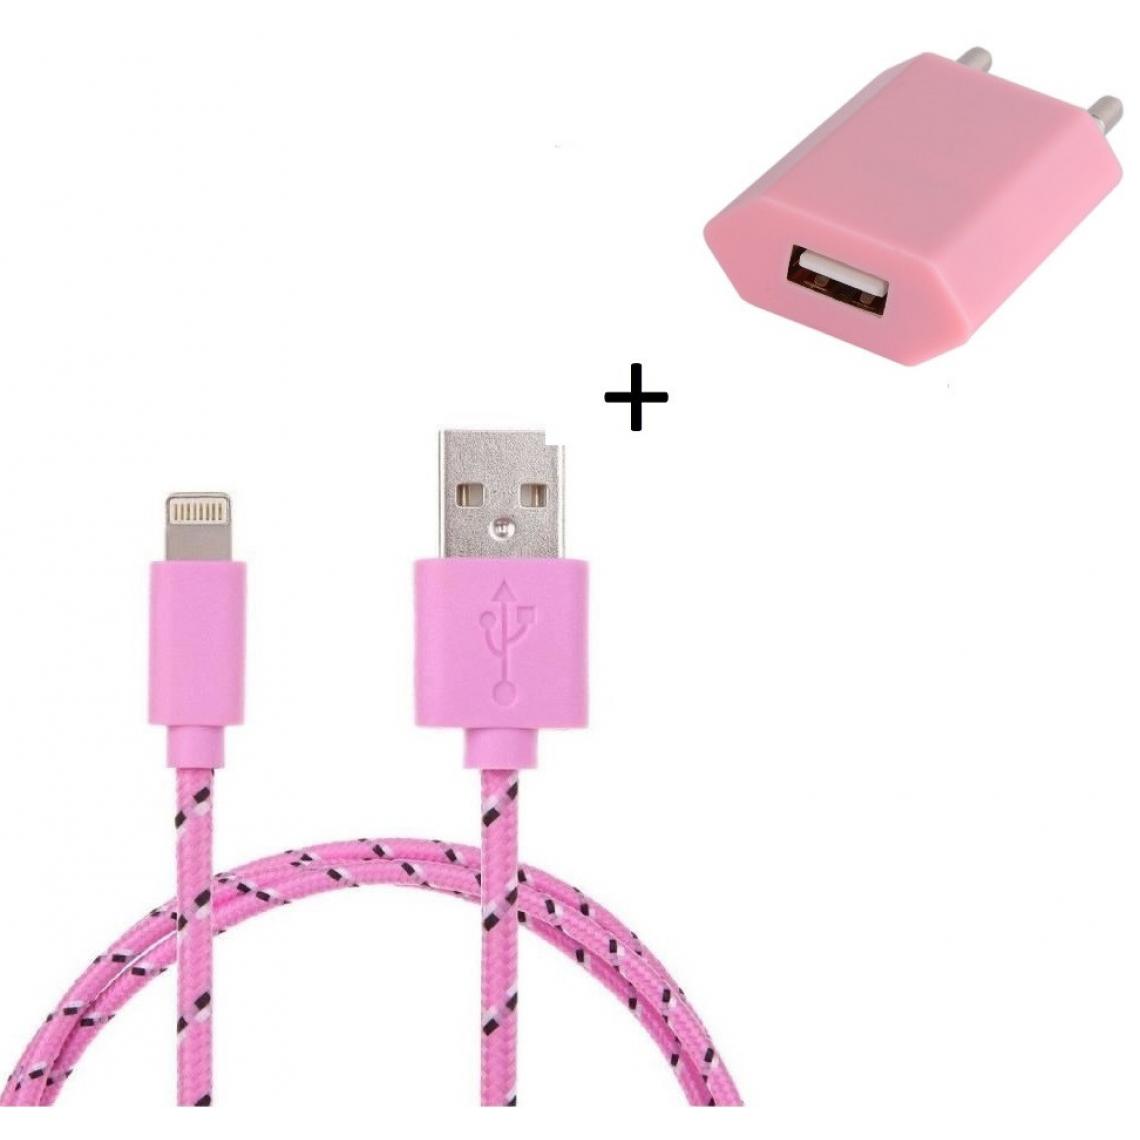 Shot - Pack Chargeur pour "IPHONE 12 Mini" Lightning (Cable Tresse 3m Chargeur + Prise Secteur USB) Murale (ROSE PALE) - Chargeur secteur téléphone